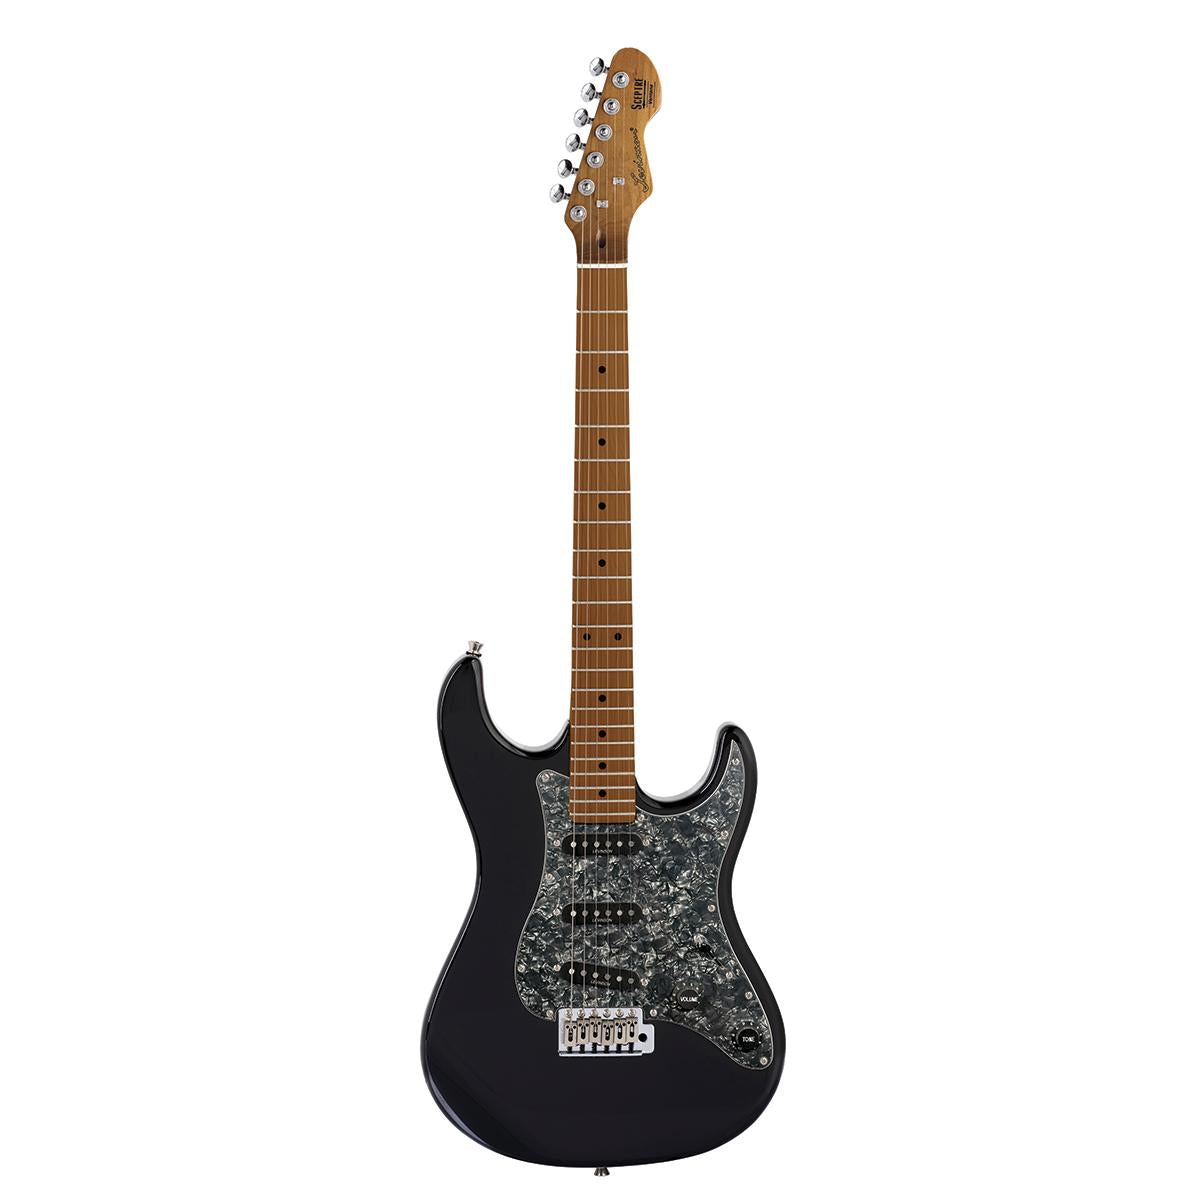 Levinson Sceptre Ventana Standard Electric Guitar SSS Maple FB Black